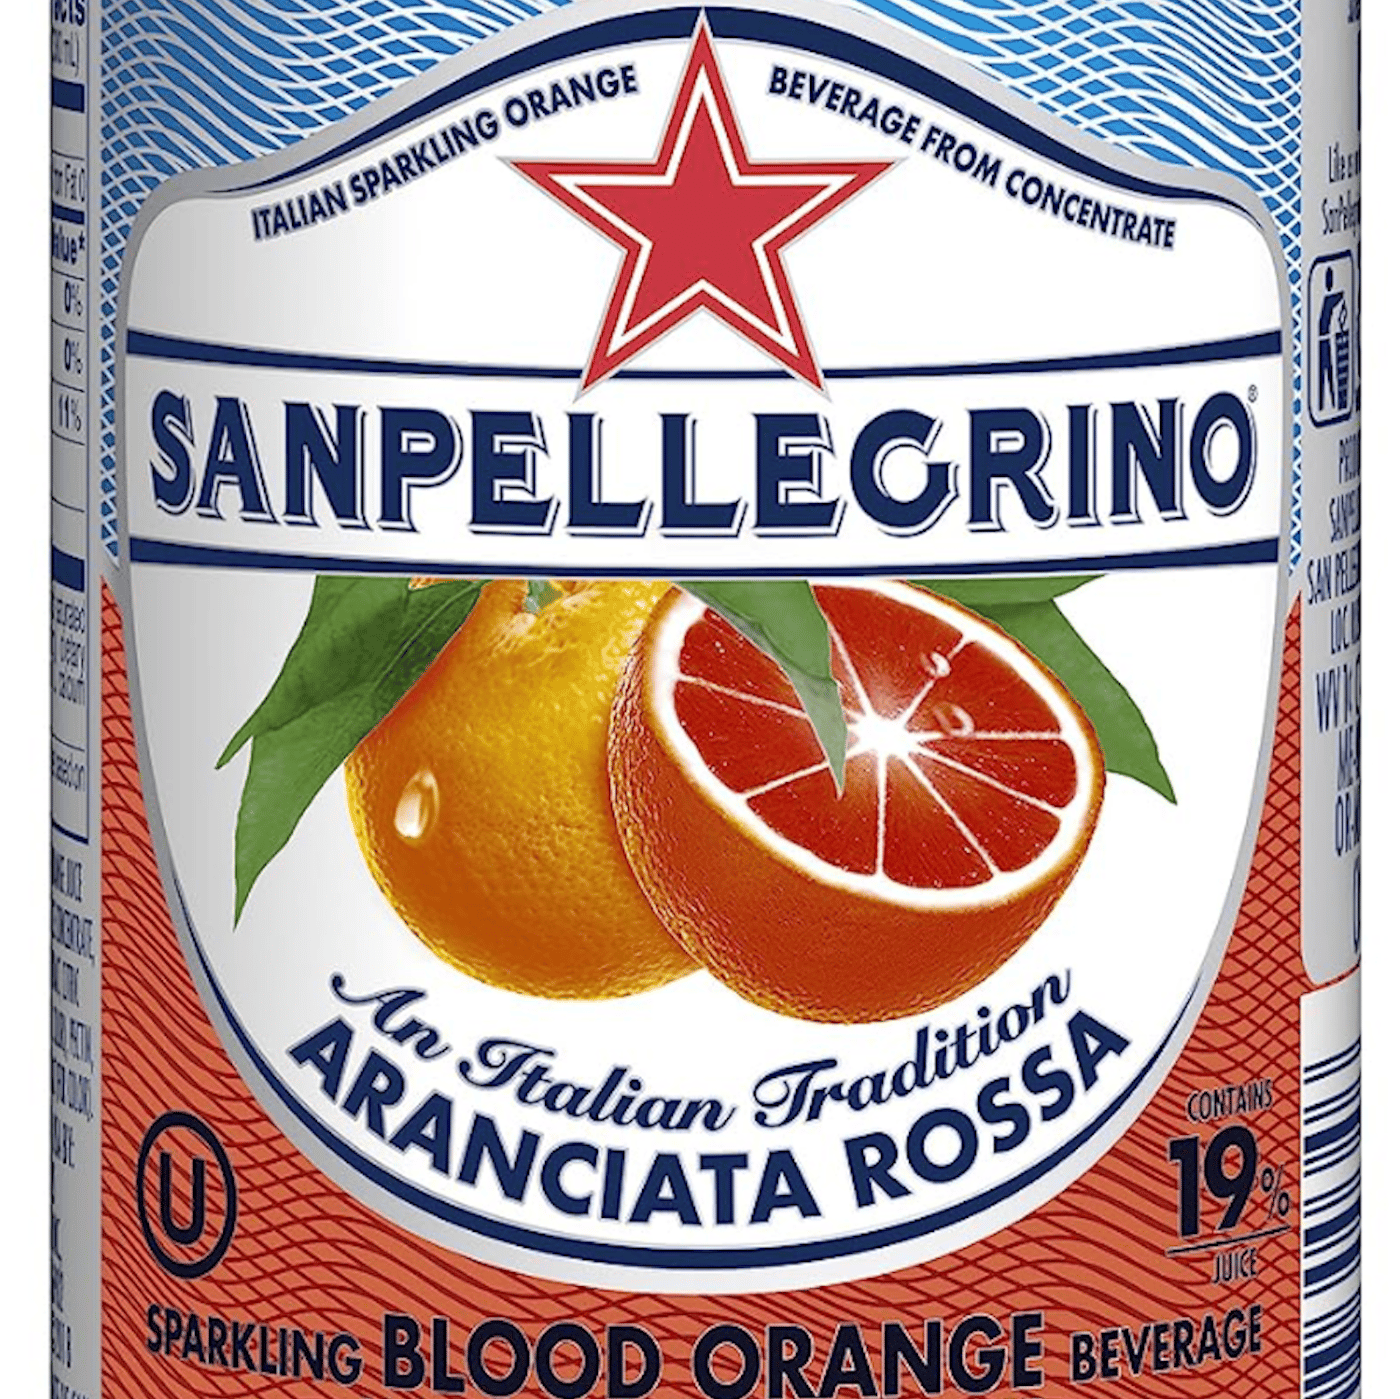 SanPellegrino Aranciata Rossa (Blood Orange)